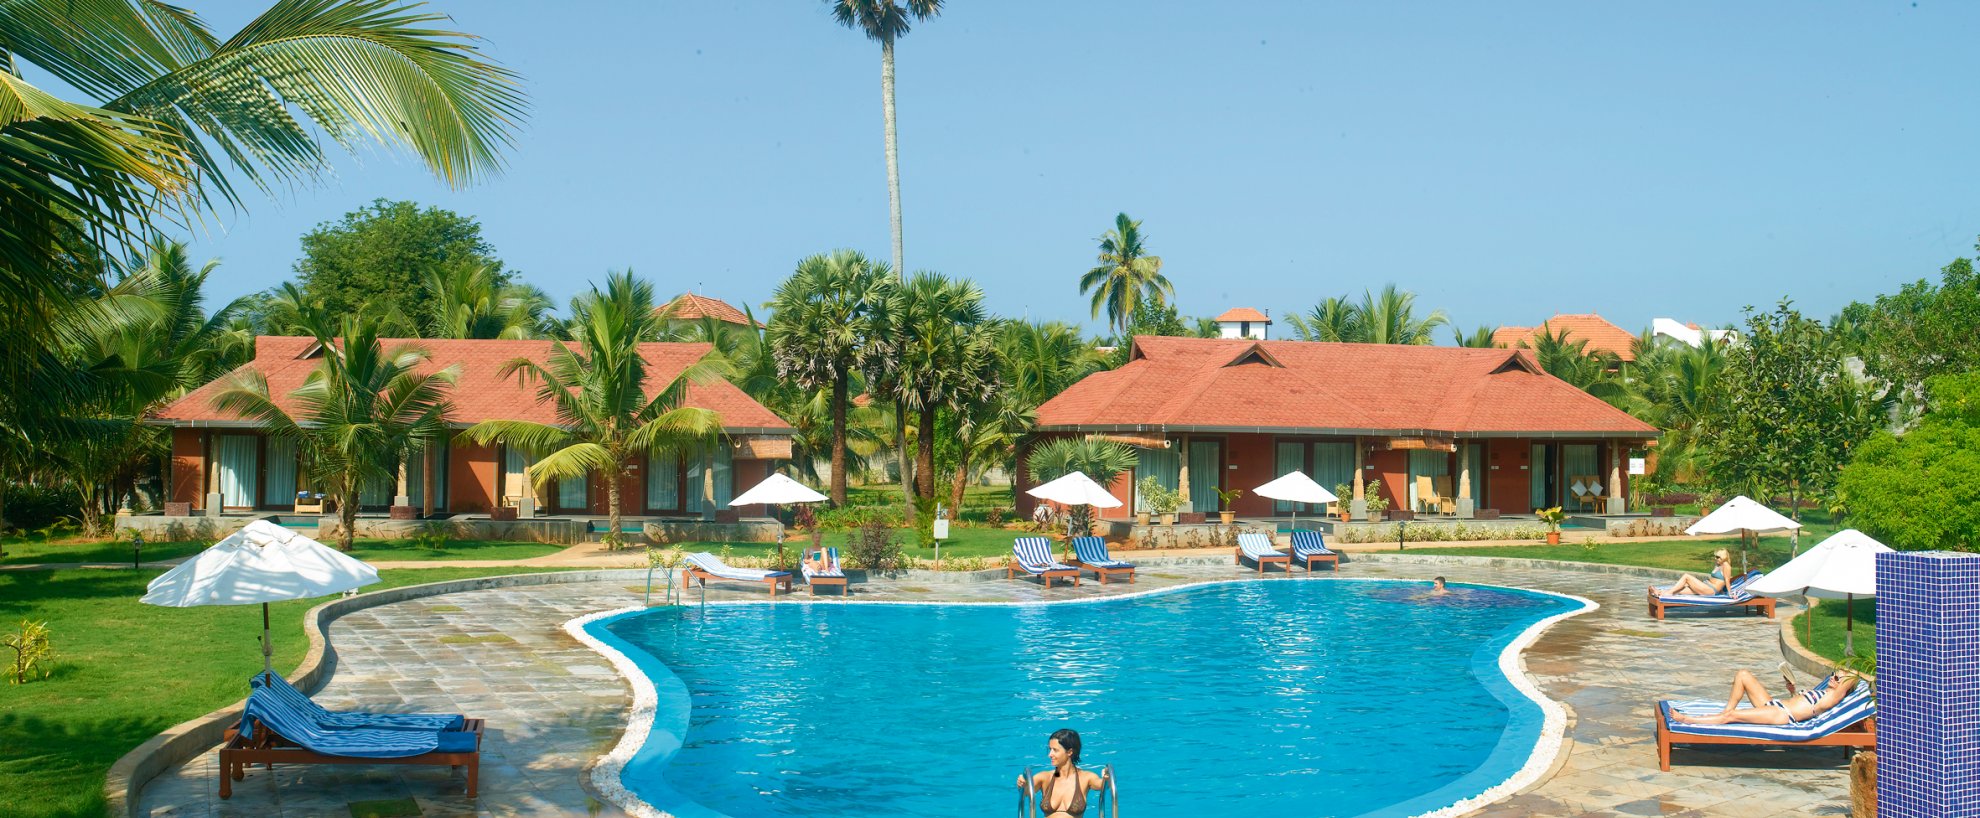 Ayurveda Kuren Reisen Kerala Backwaters Poovar Island Resort Pool